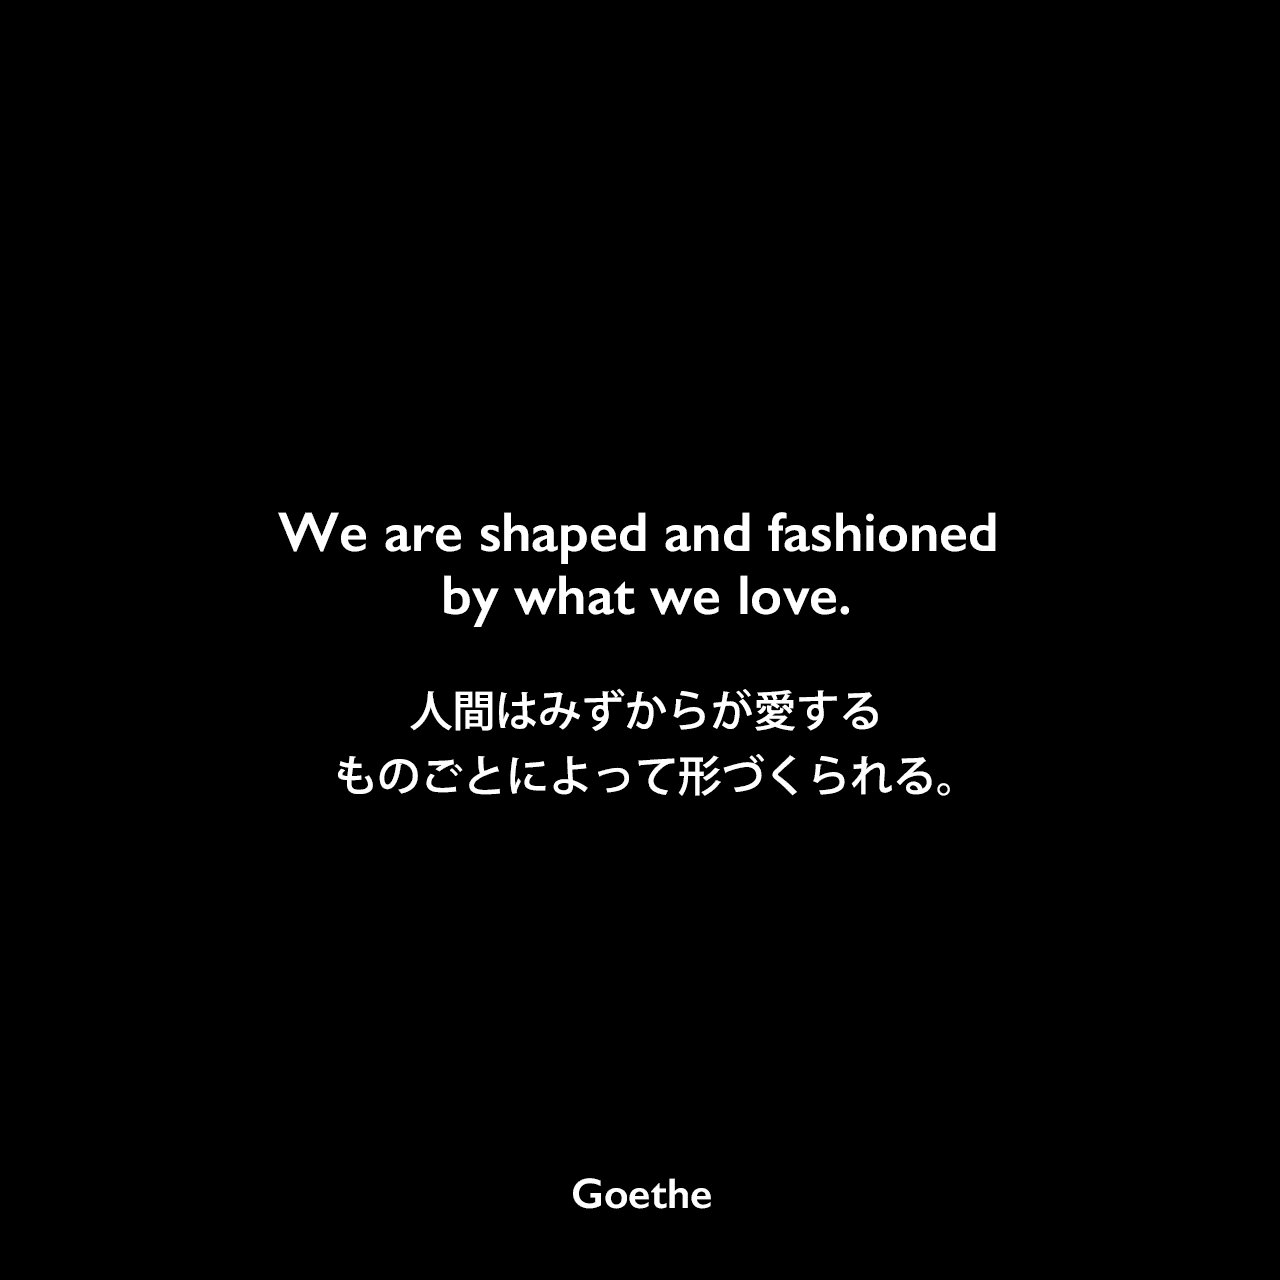 We are shaped and fashioned by what we love.人間はみずからが愛するものごとによって、形づくられる。Johann Wolfgang von Goethe